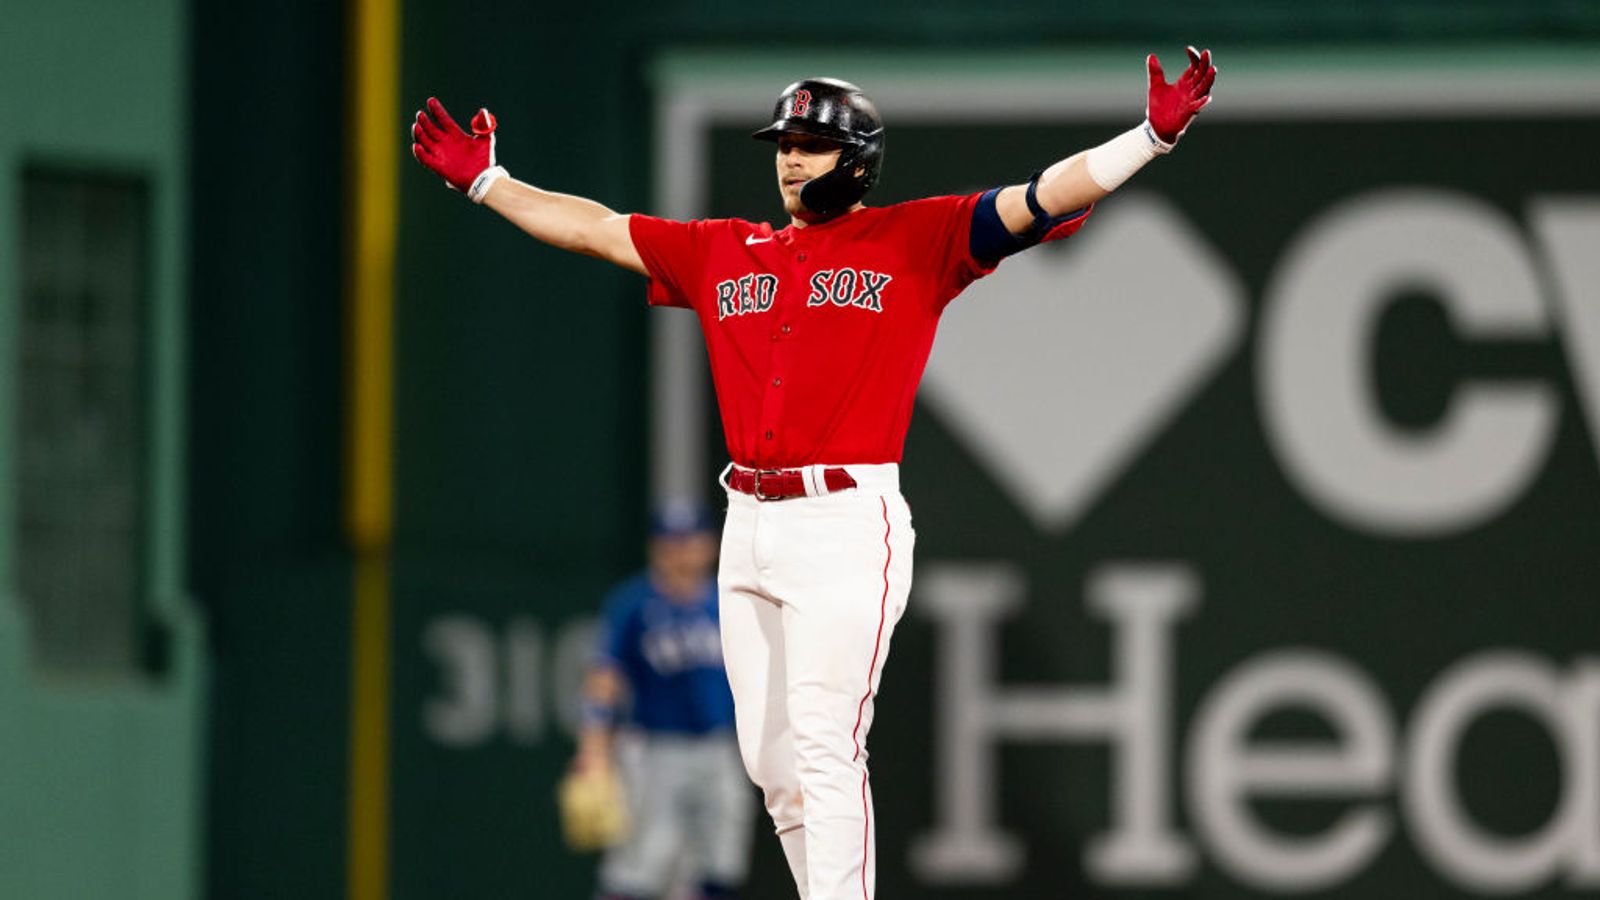 BSJ Game Report: Red Sox 10, Rangers 6 - Kiké Hernández sparks 6-run  inning, Sox take series over Texas